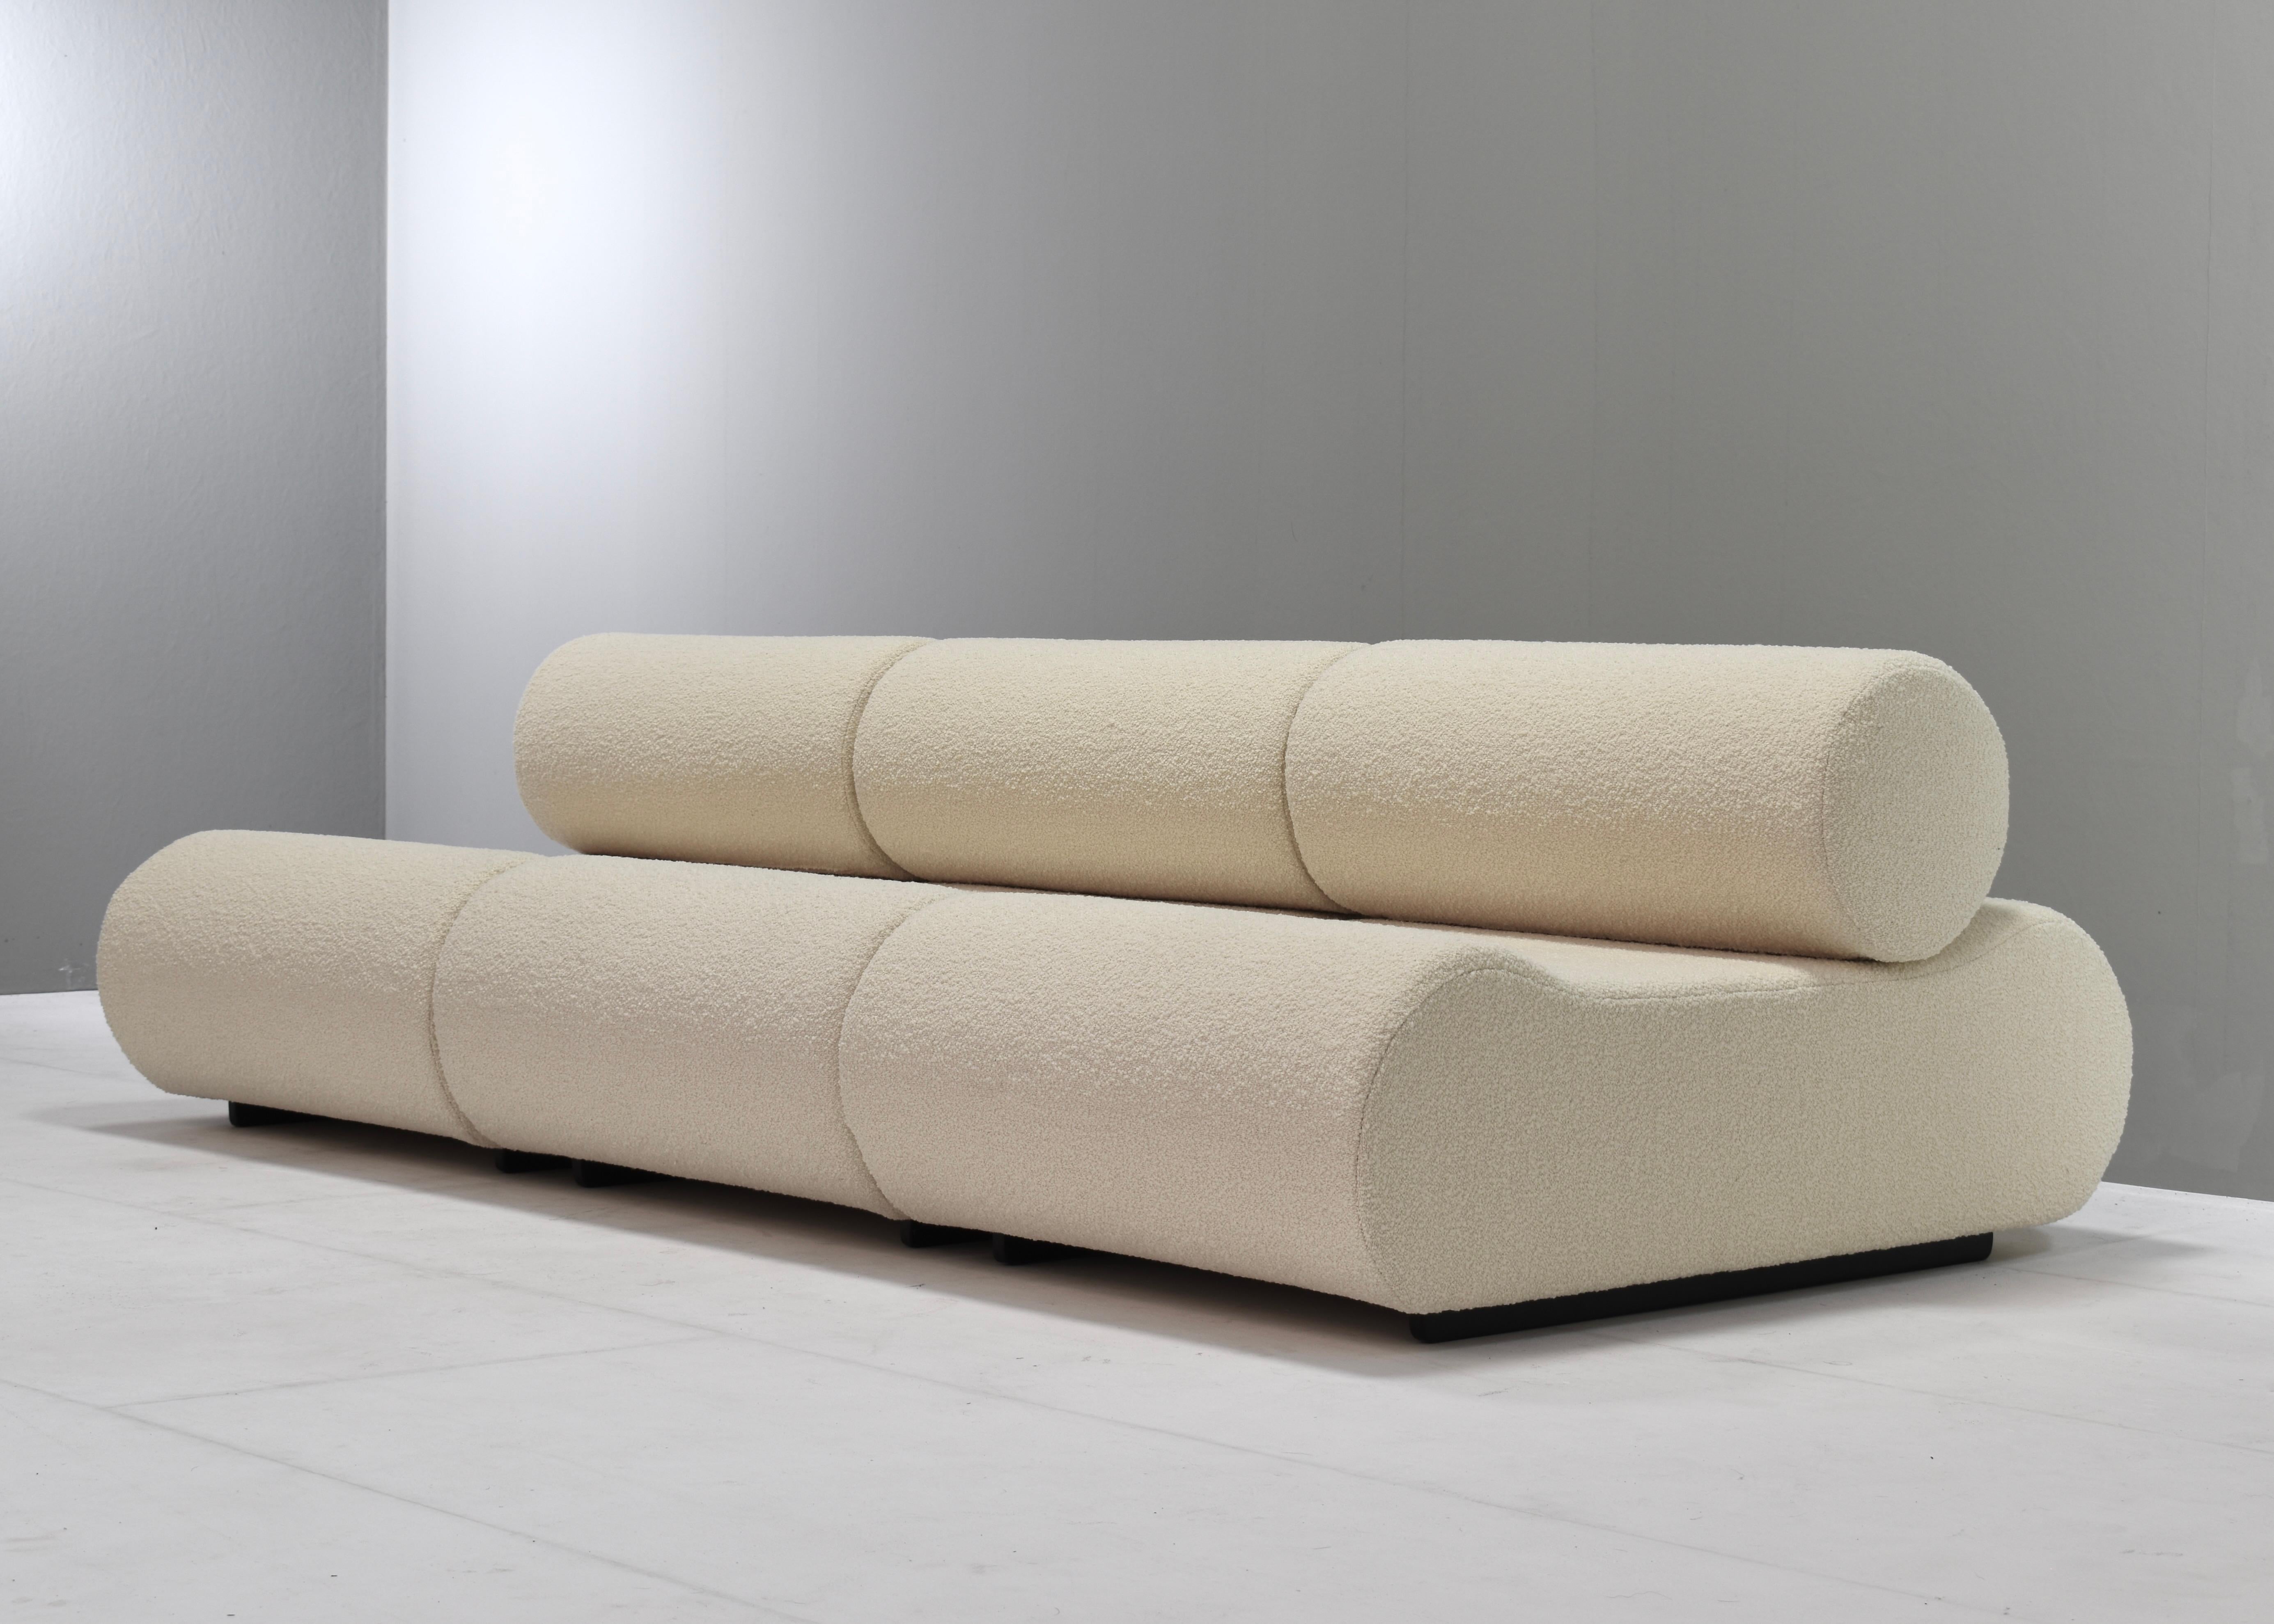 Mid-Century Modern Klaus Uredat ‘Corbi’ Sofa for COR, Germany – 1969 in New Bouclé Upholstery For Sale